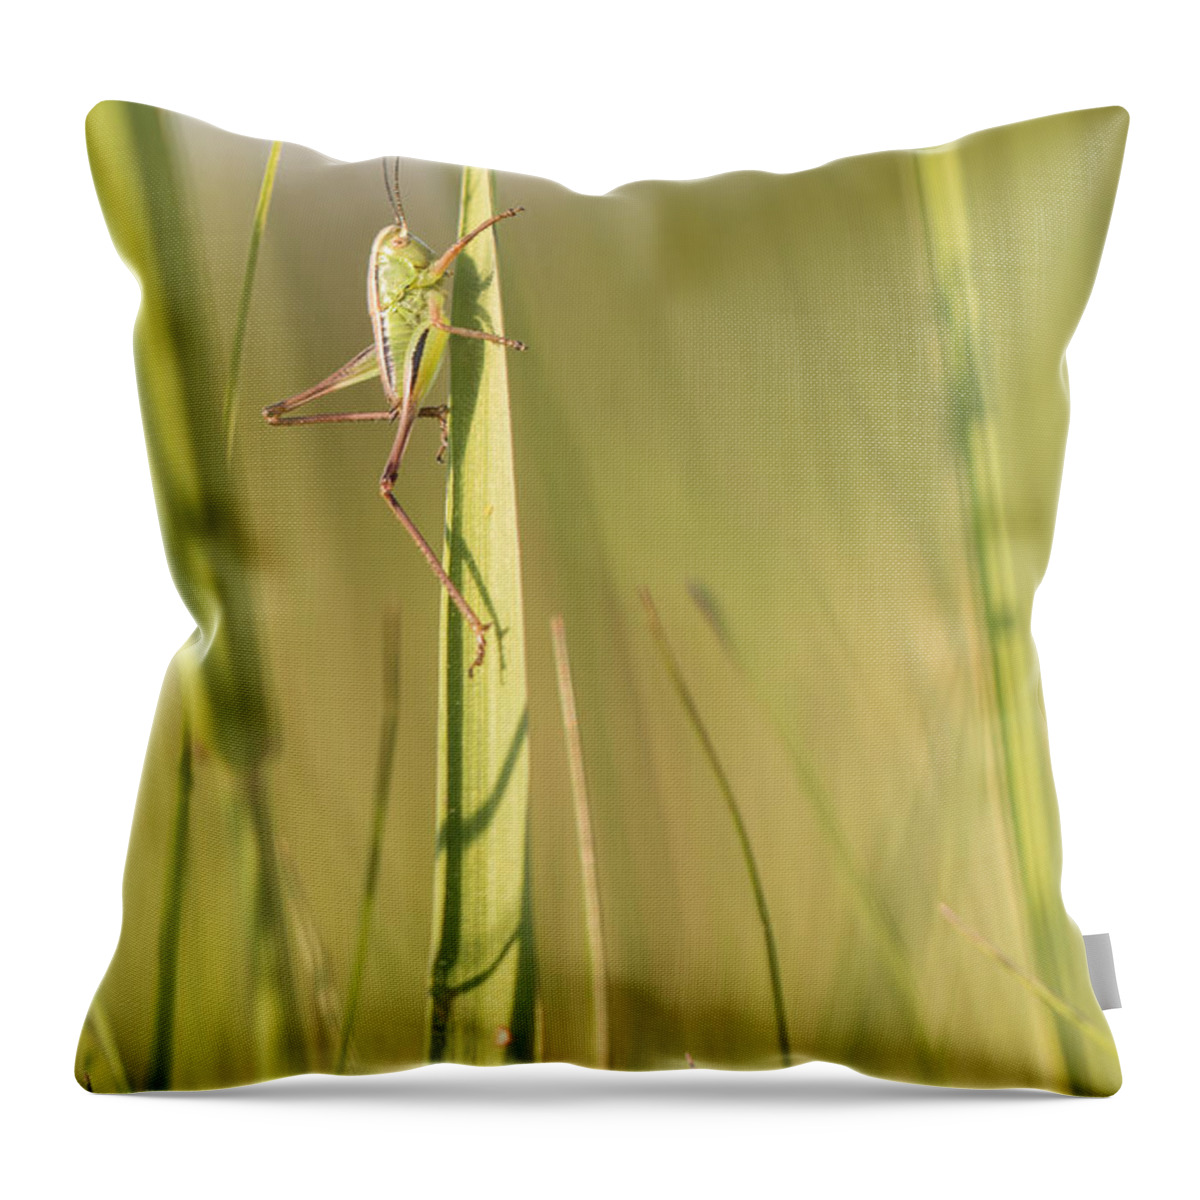 Bulgaria Throw Pillow featuring the photograph 11 Green Grasshopper by Jivko Nakev